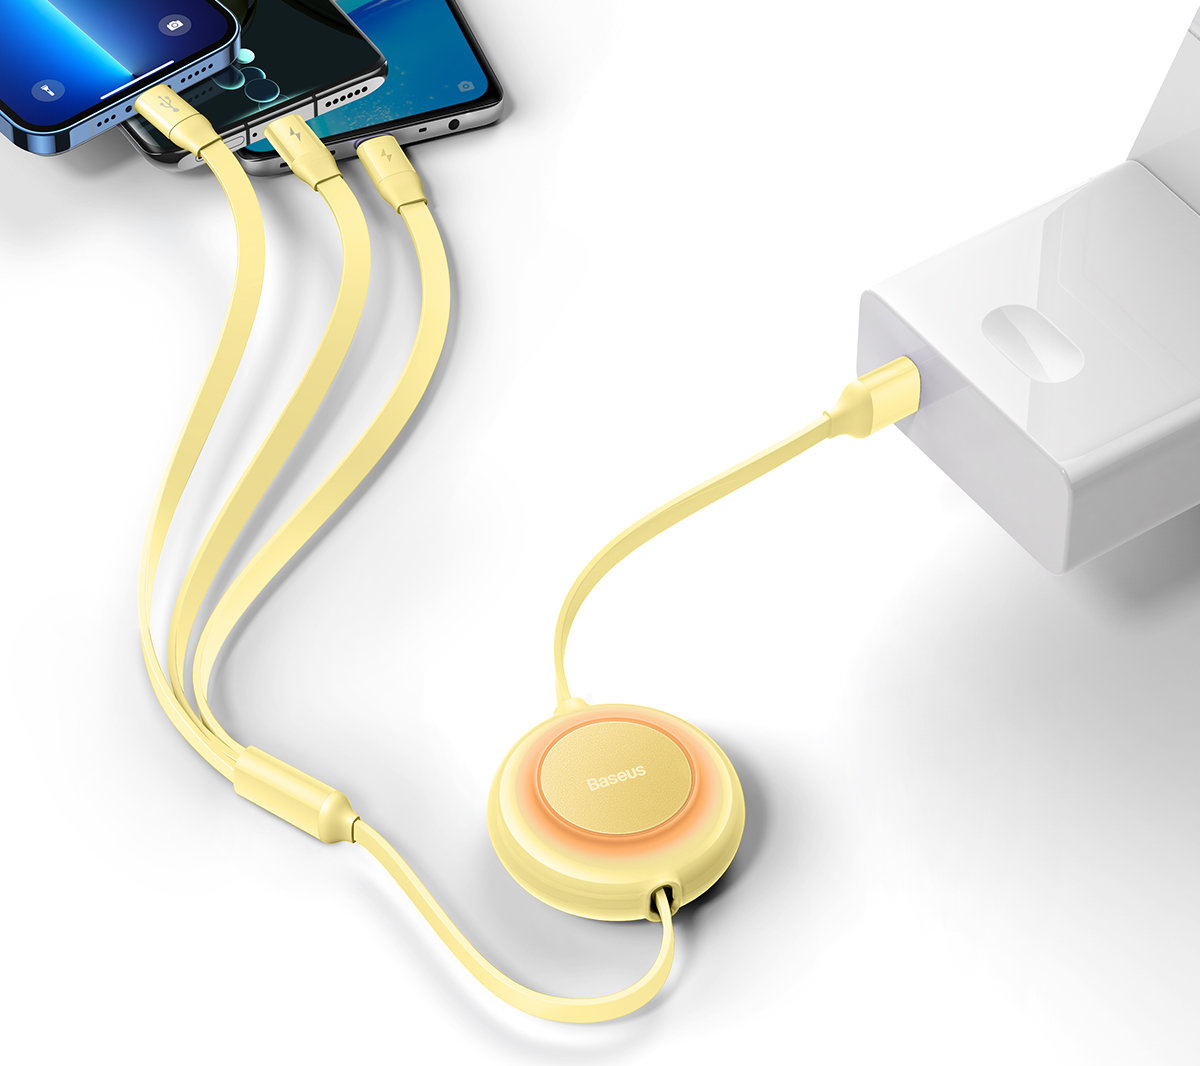 Baseus Bright Mirror 2 3in1 USB-A - microUSB + Lightning + USB-C 3.5A 1.1m yellow